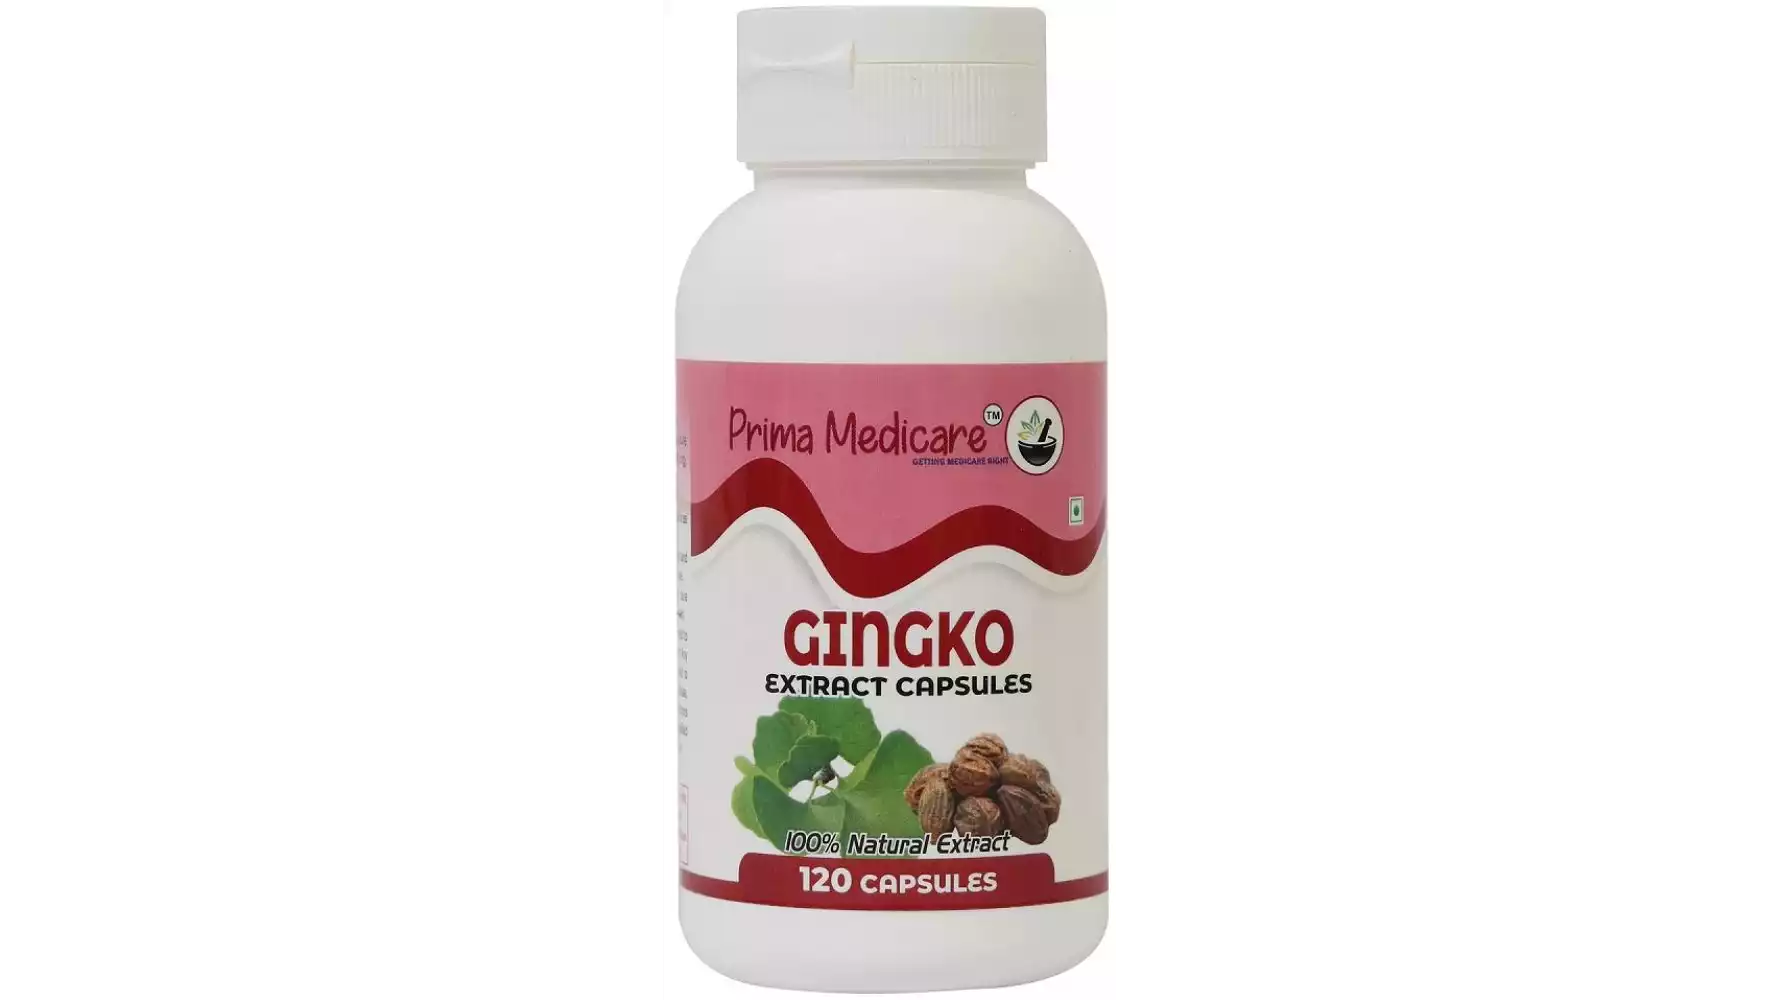 Prima Medicare Gingko Extract Capsules (120caps)